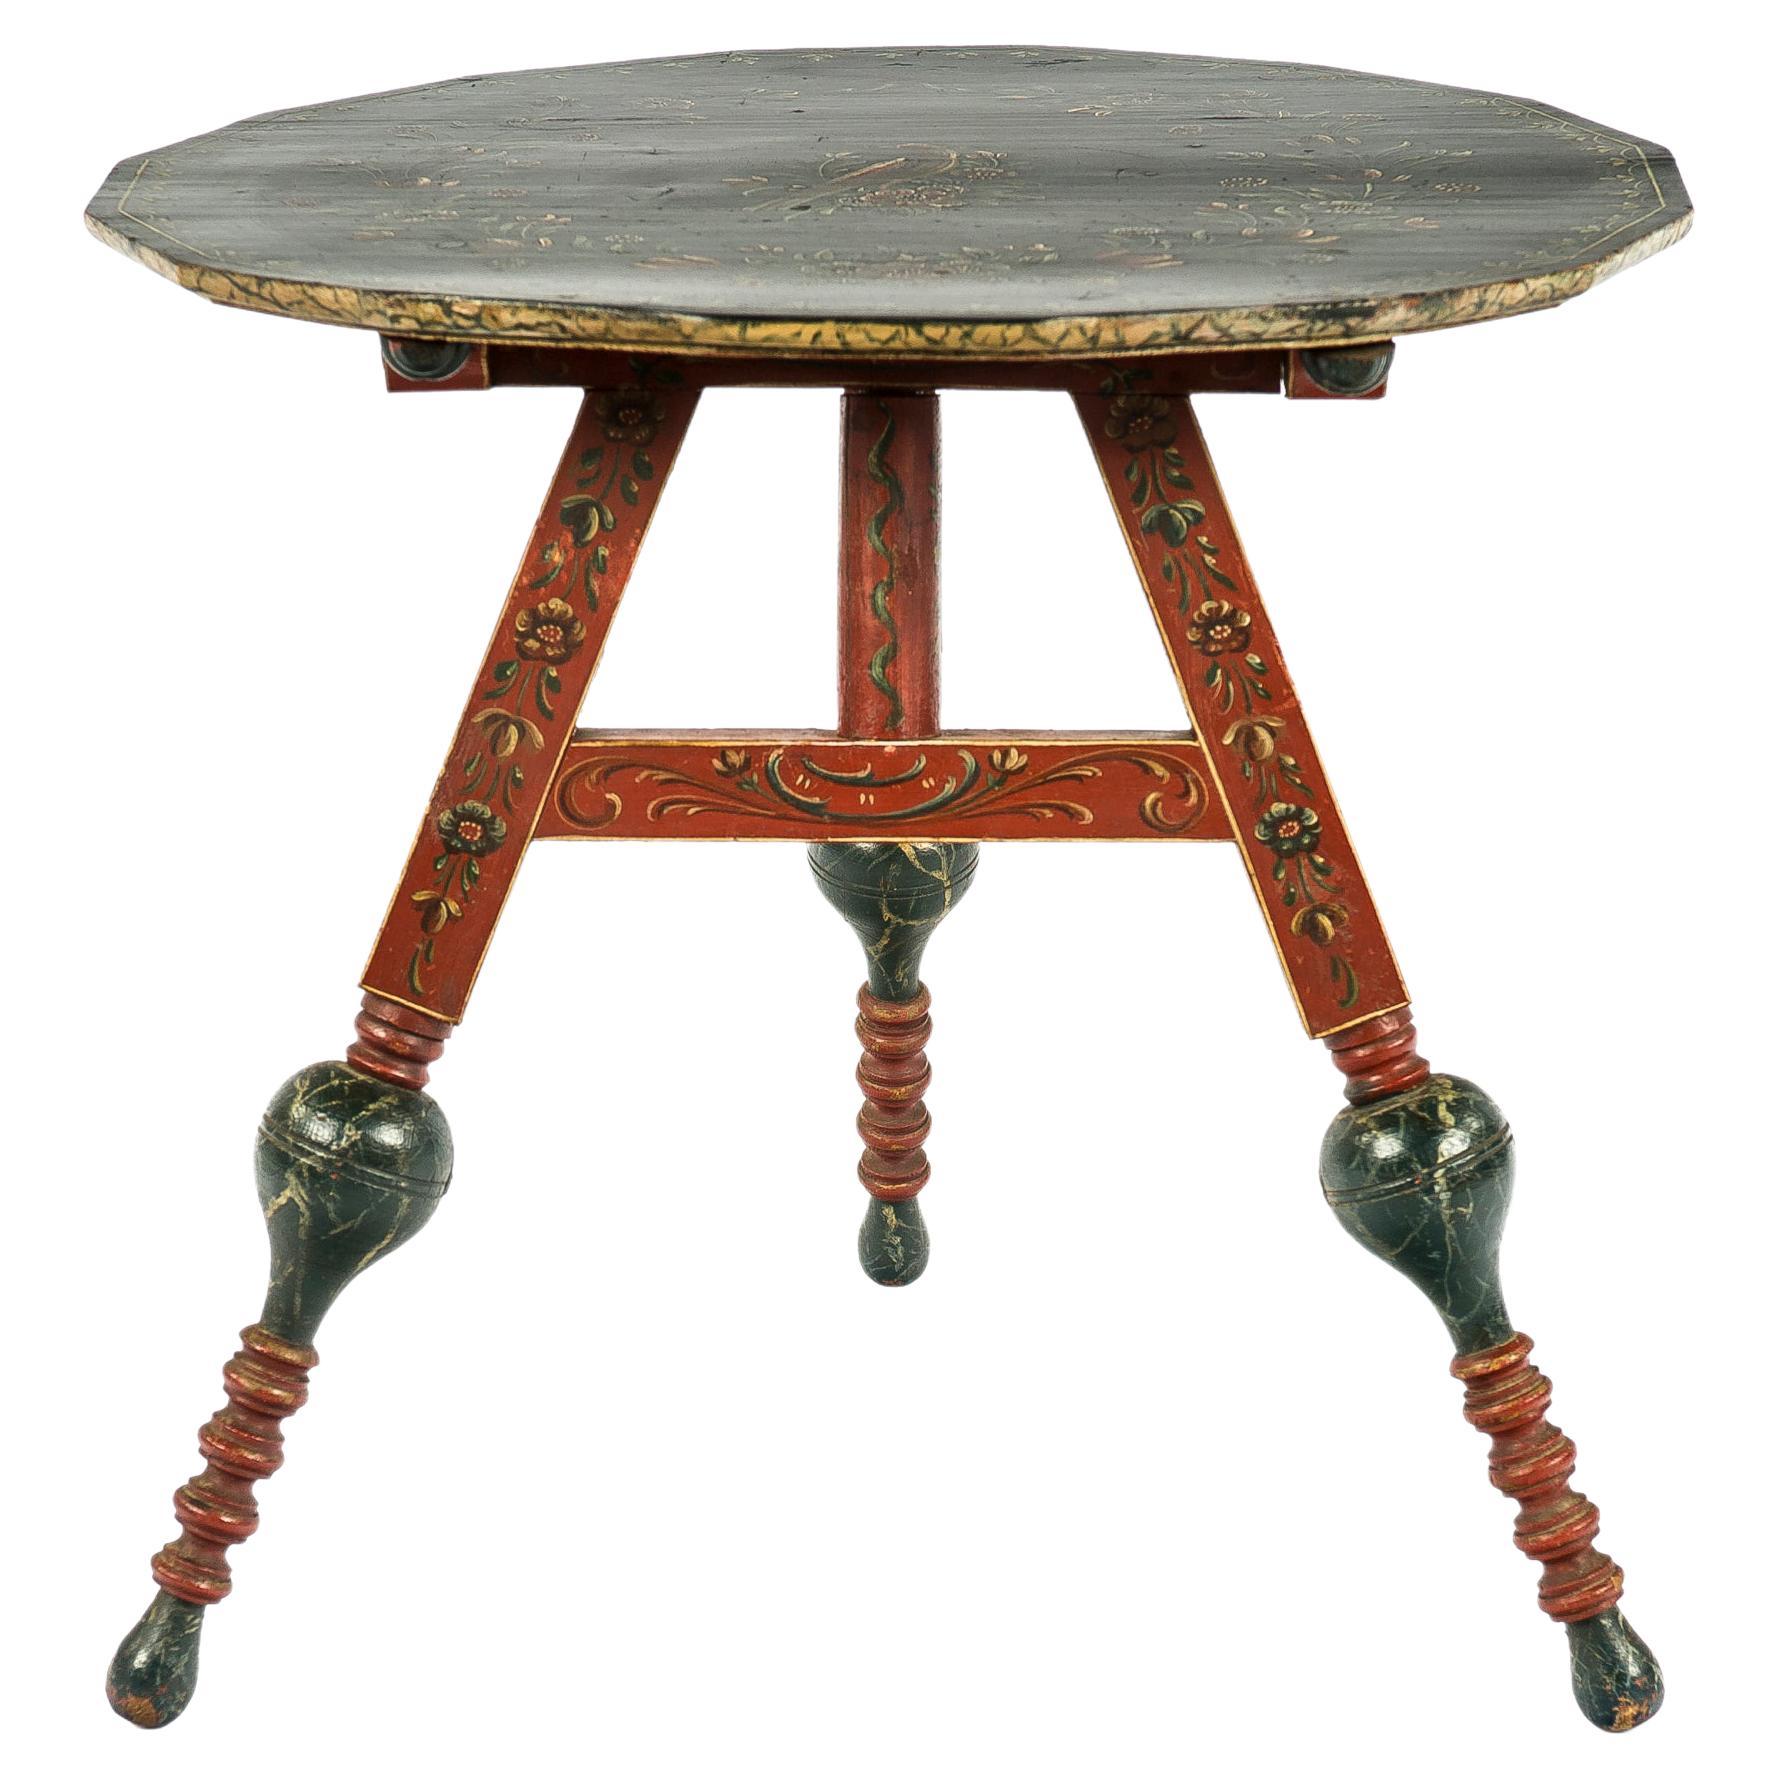 Antique Early 19th Century Dutch Folk Art “Hindeloopen” Painted Tilt Top Table